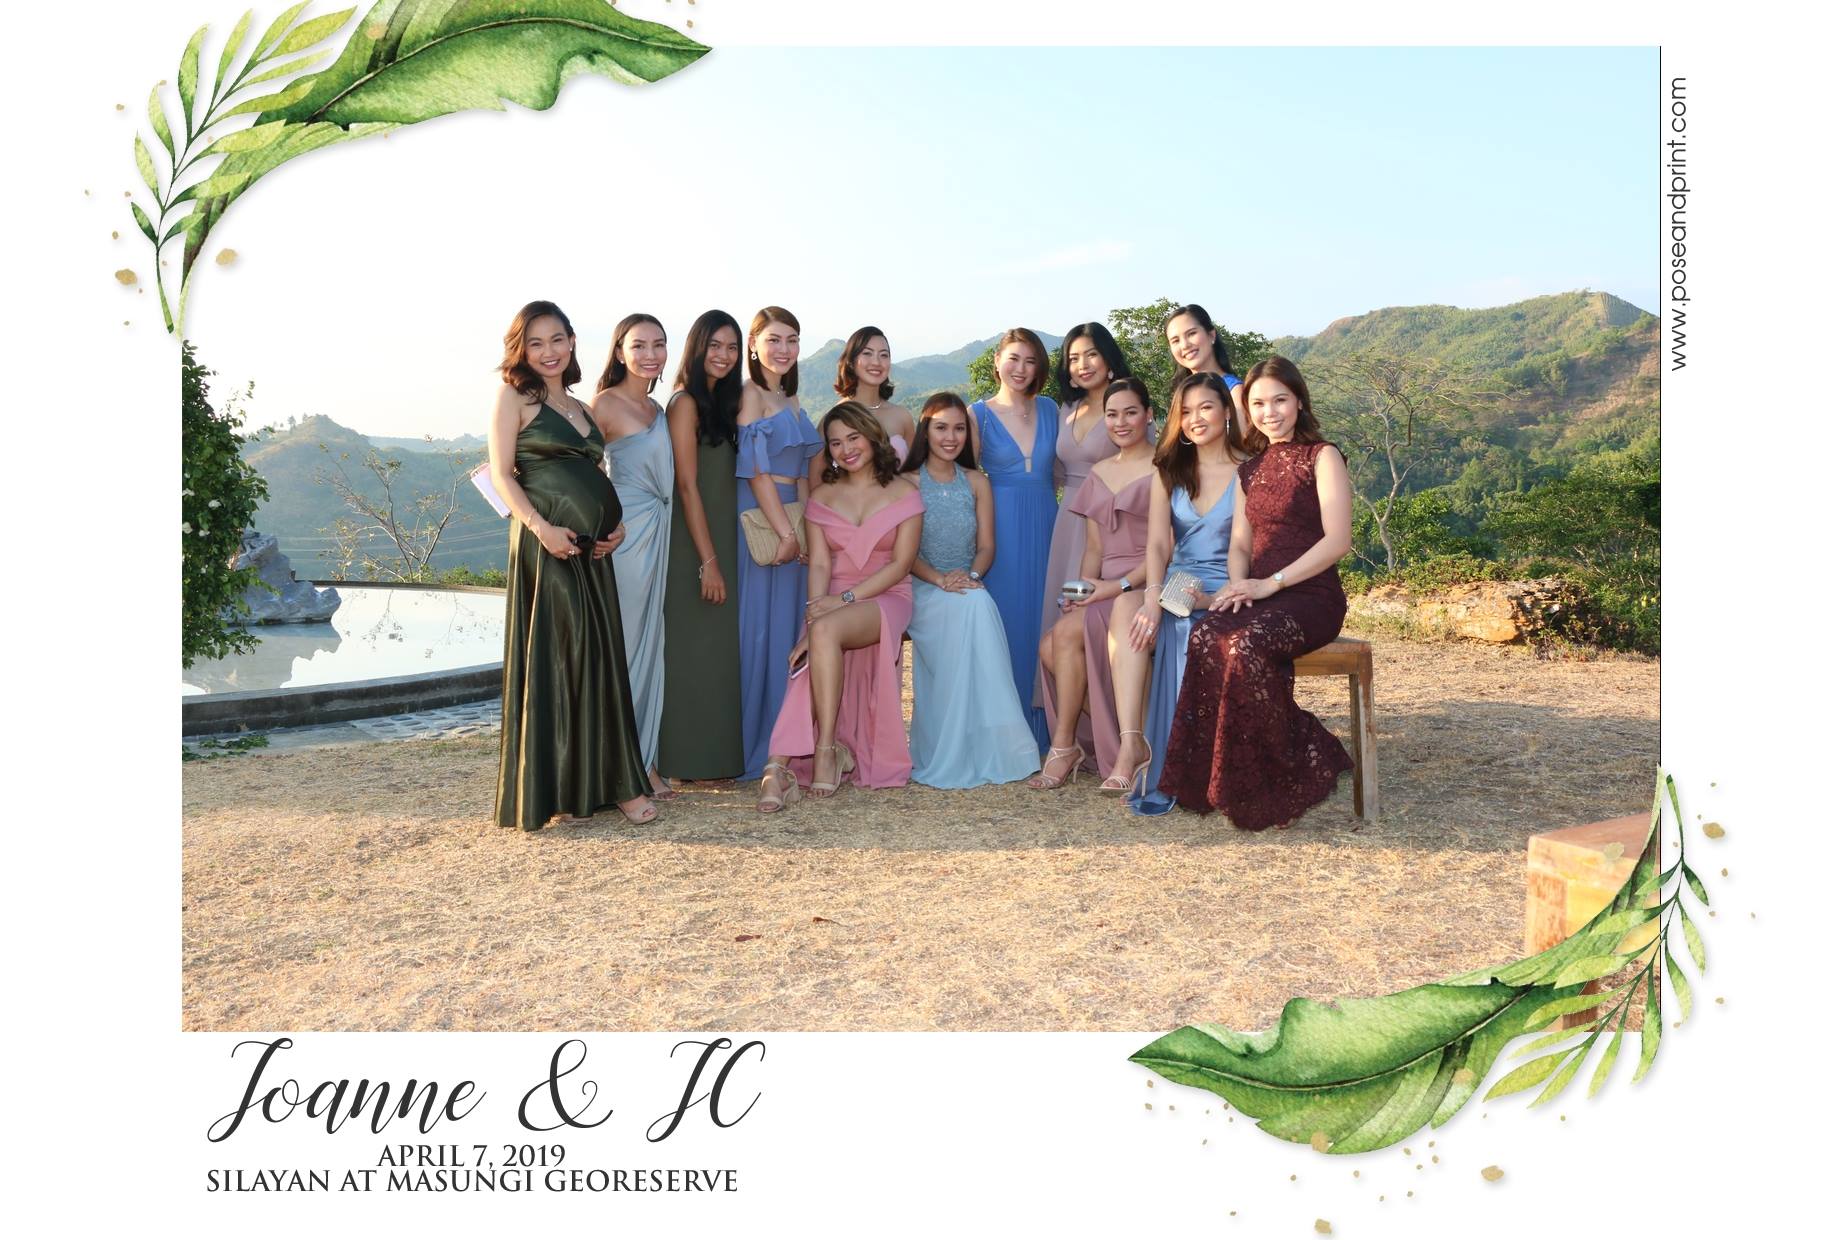 Joanne and JC’s Wedding – Photoman